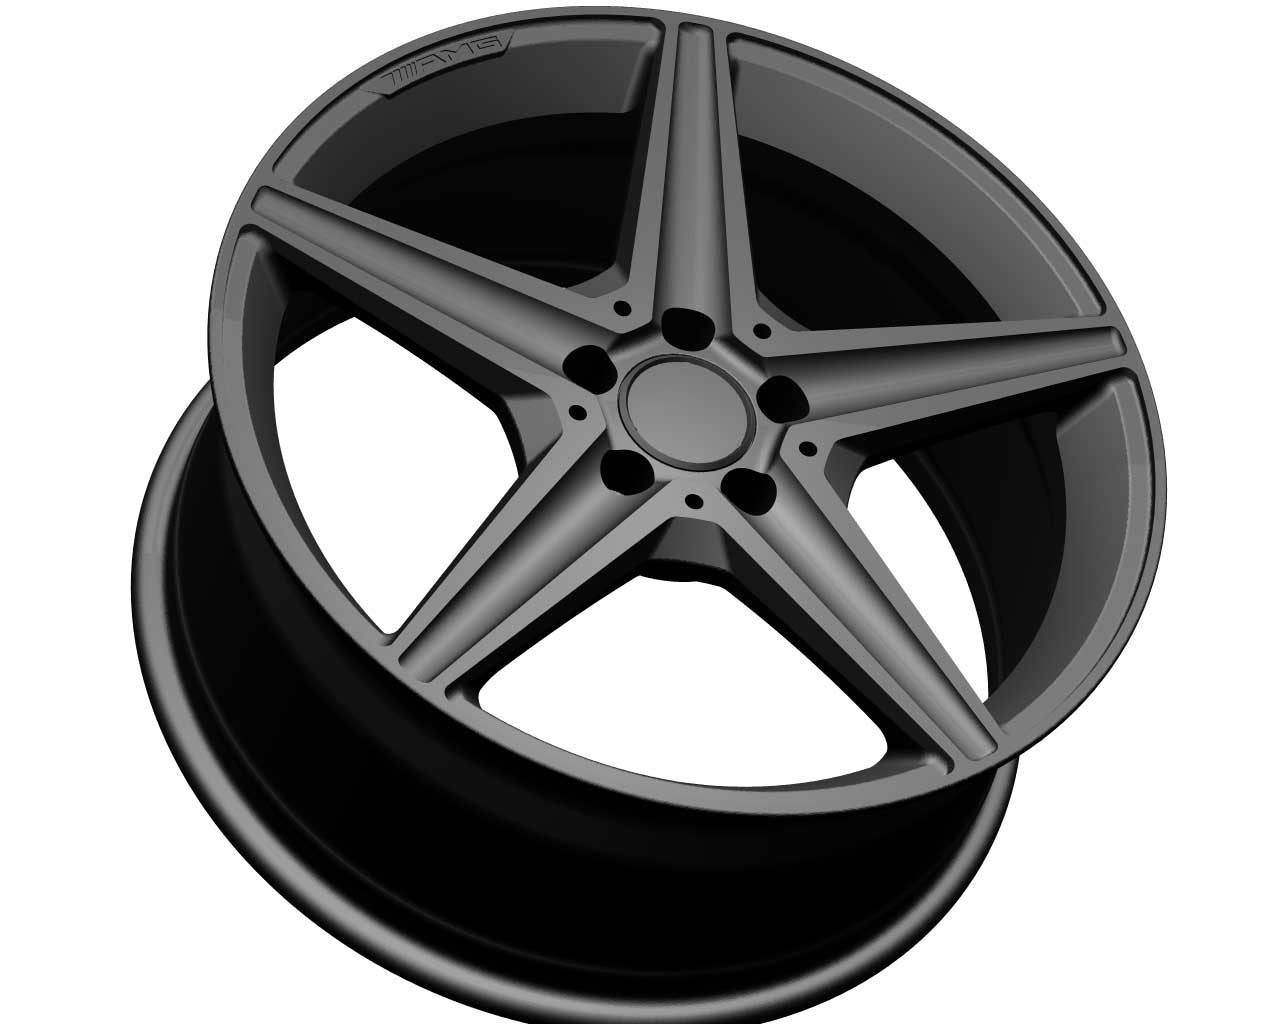 Mercedes Wheel 18 x 9.5 Car Rim PCD 5x112 ET 45 CB 66.6 1PC